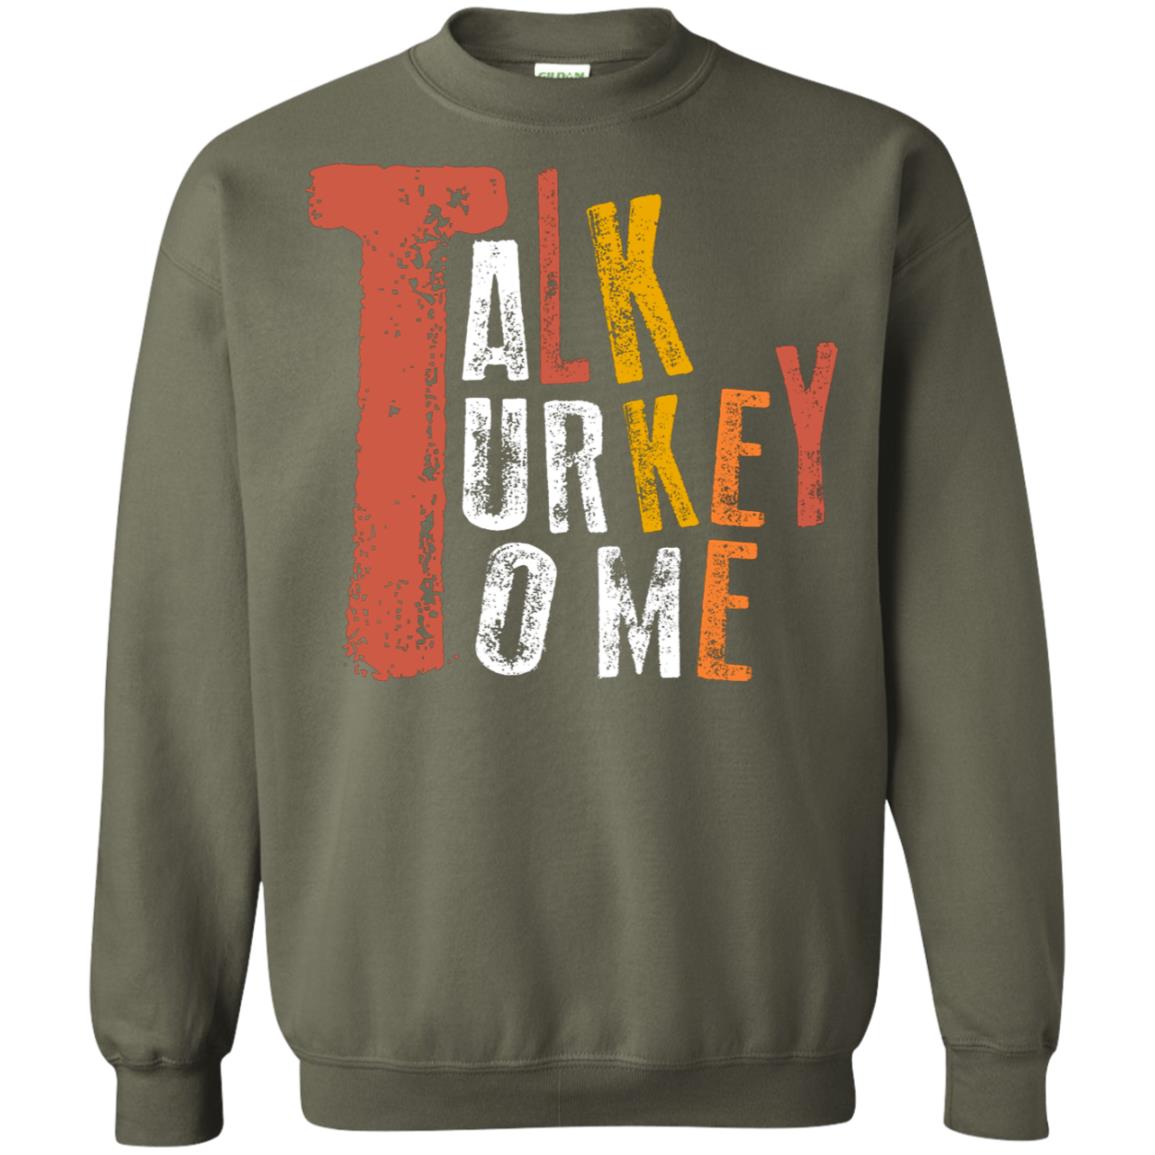 Talk Turkey To Me Thanksgiving Idea Gift ShirtG180 Gildan Crewneck Pullover Sweatshirt 8 oz.